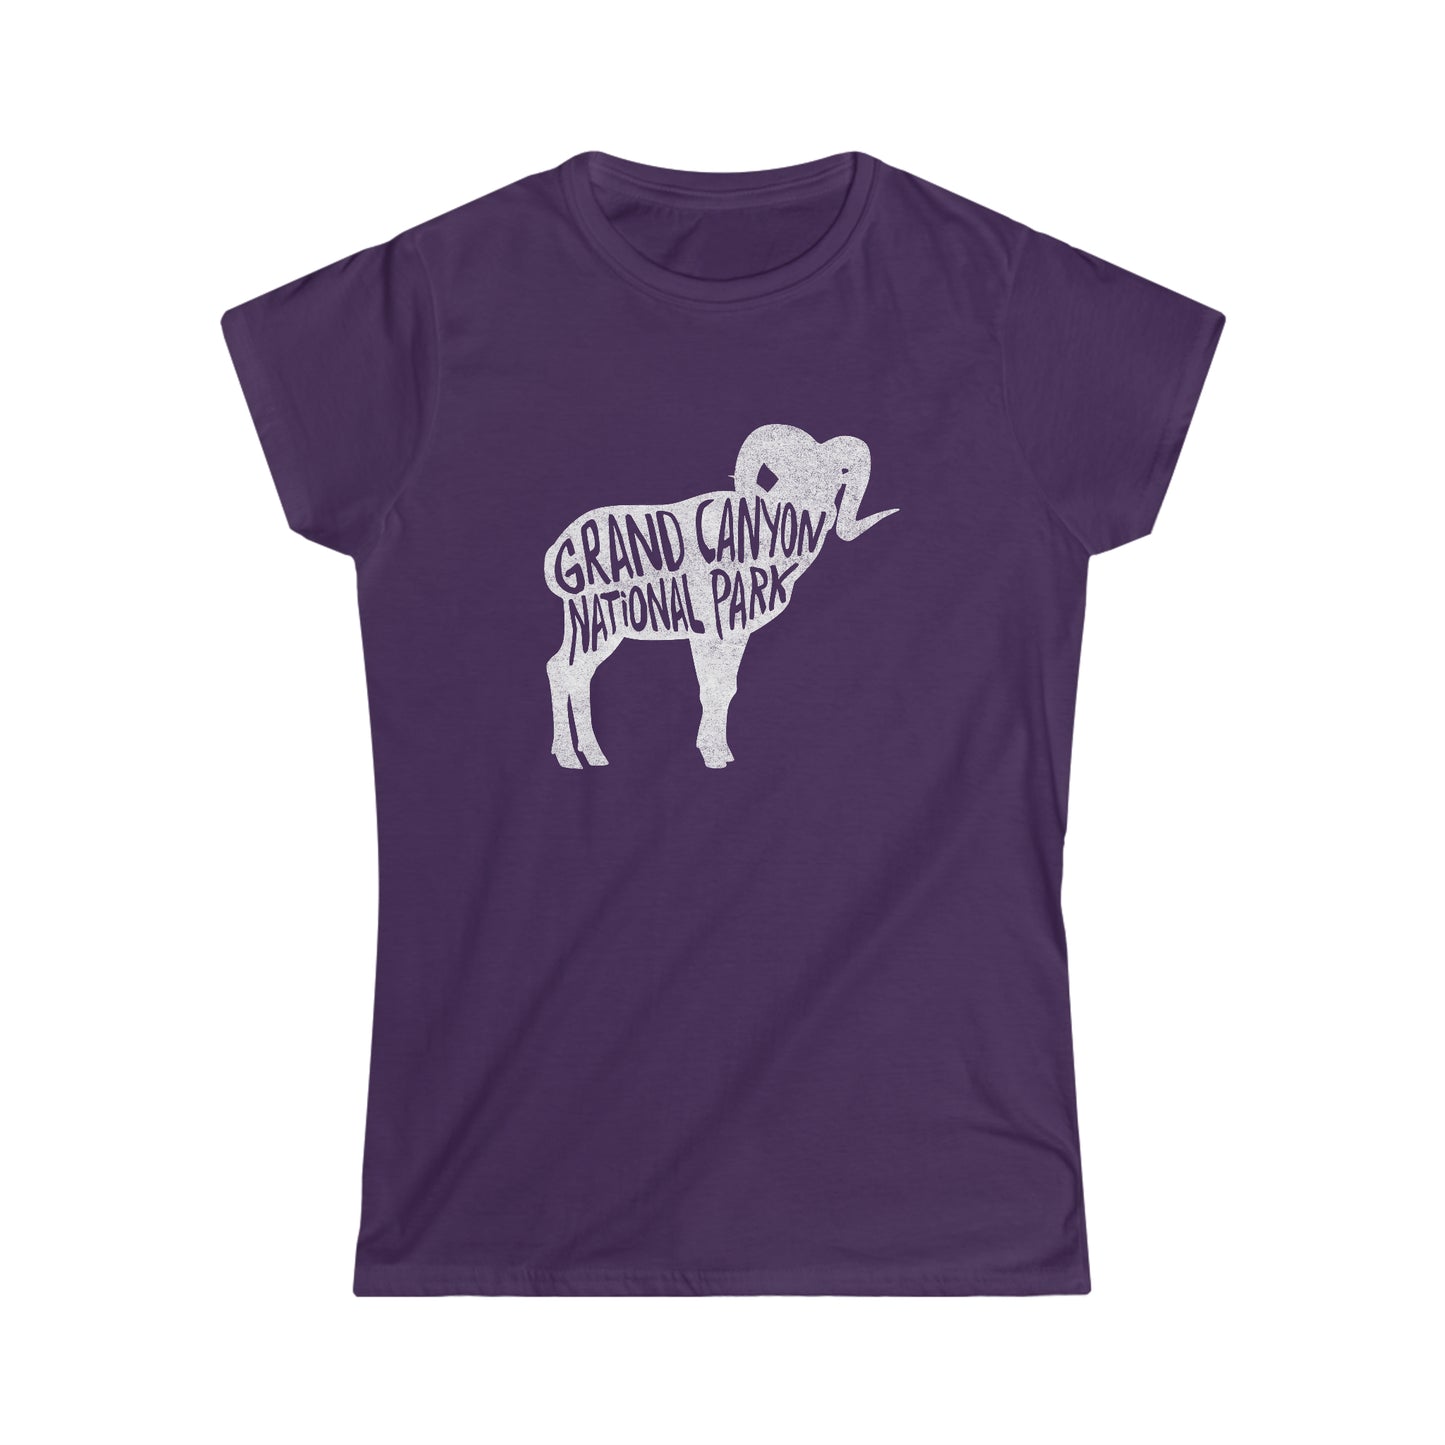 Grand Canyon National Park Women's T-Shirt - Bighorn Sheep